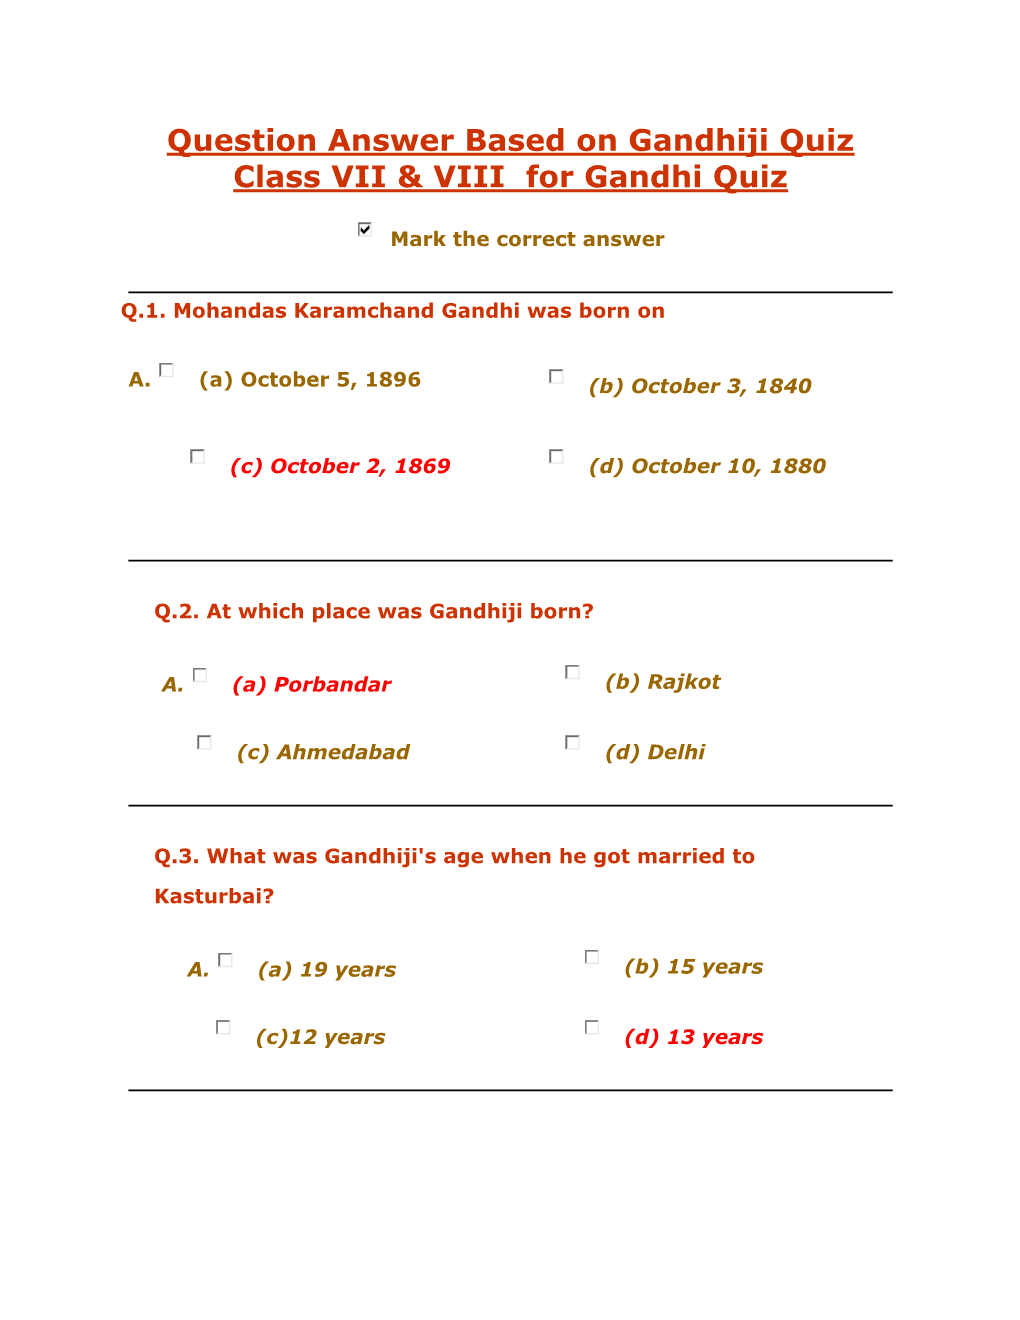 Question Answer Based on Gandhiji Quiz Class VII & VIII for Gandhi Quiz